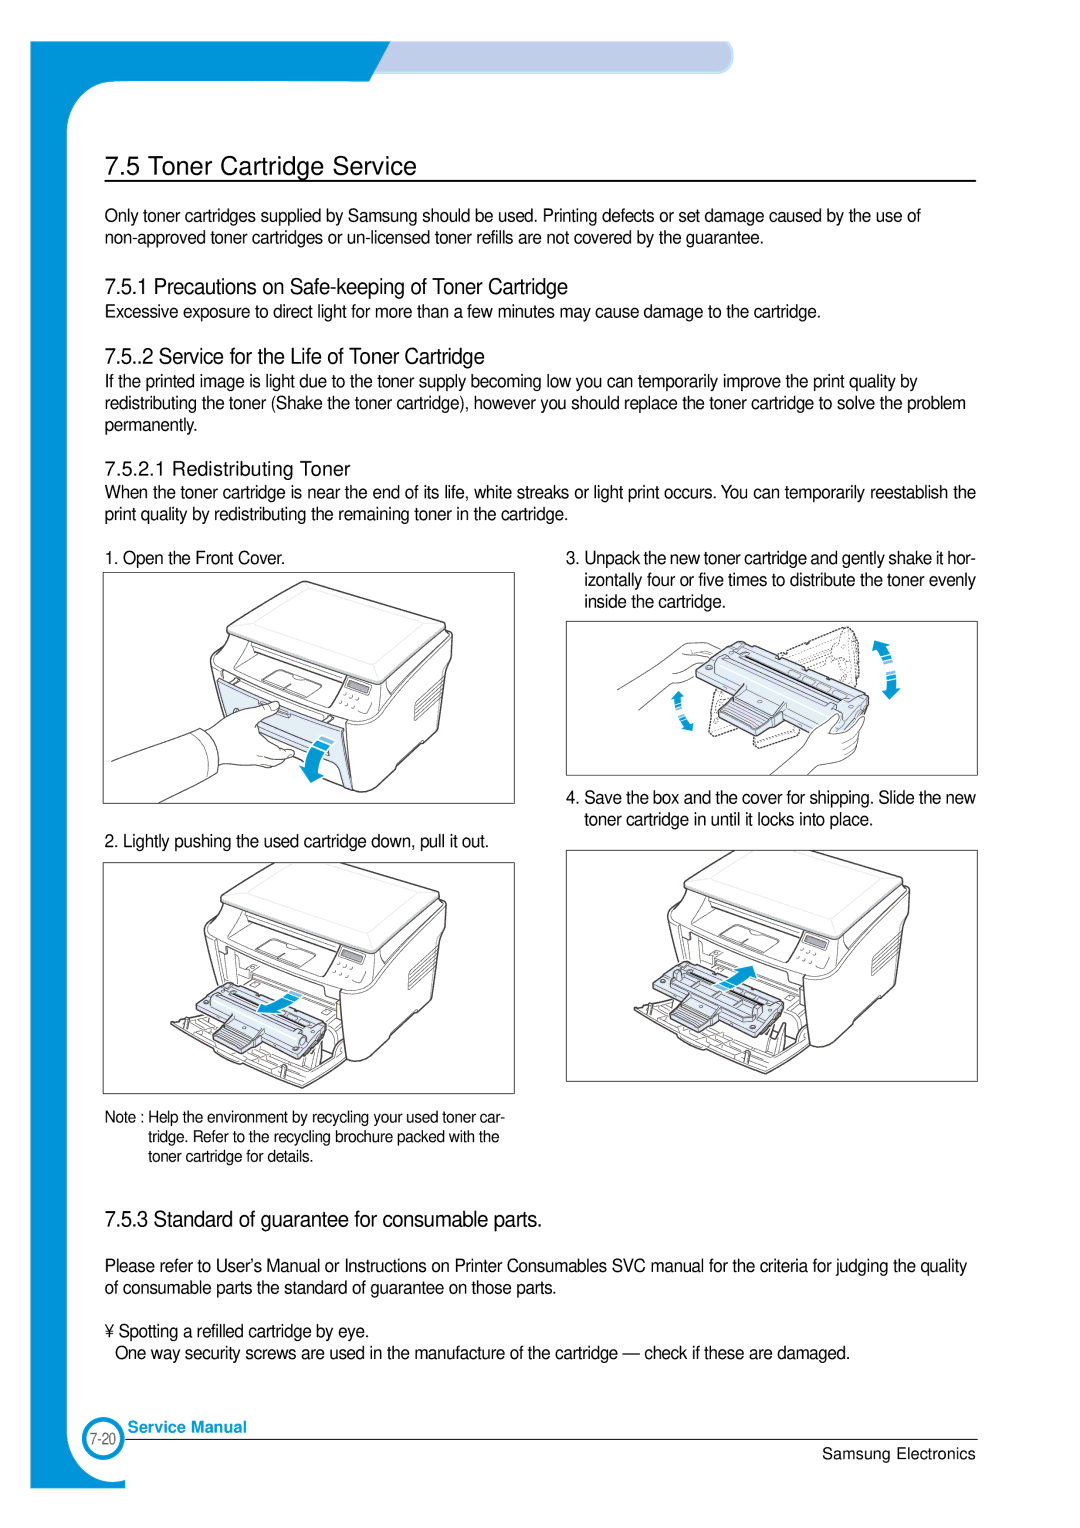 Samsung SCX-4100 Toner Cartridge Service, Precautions on Safe-keeping of Toner Cartridge, Redistributing Toner 